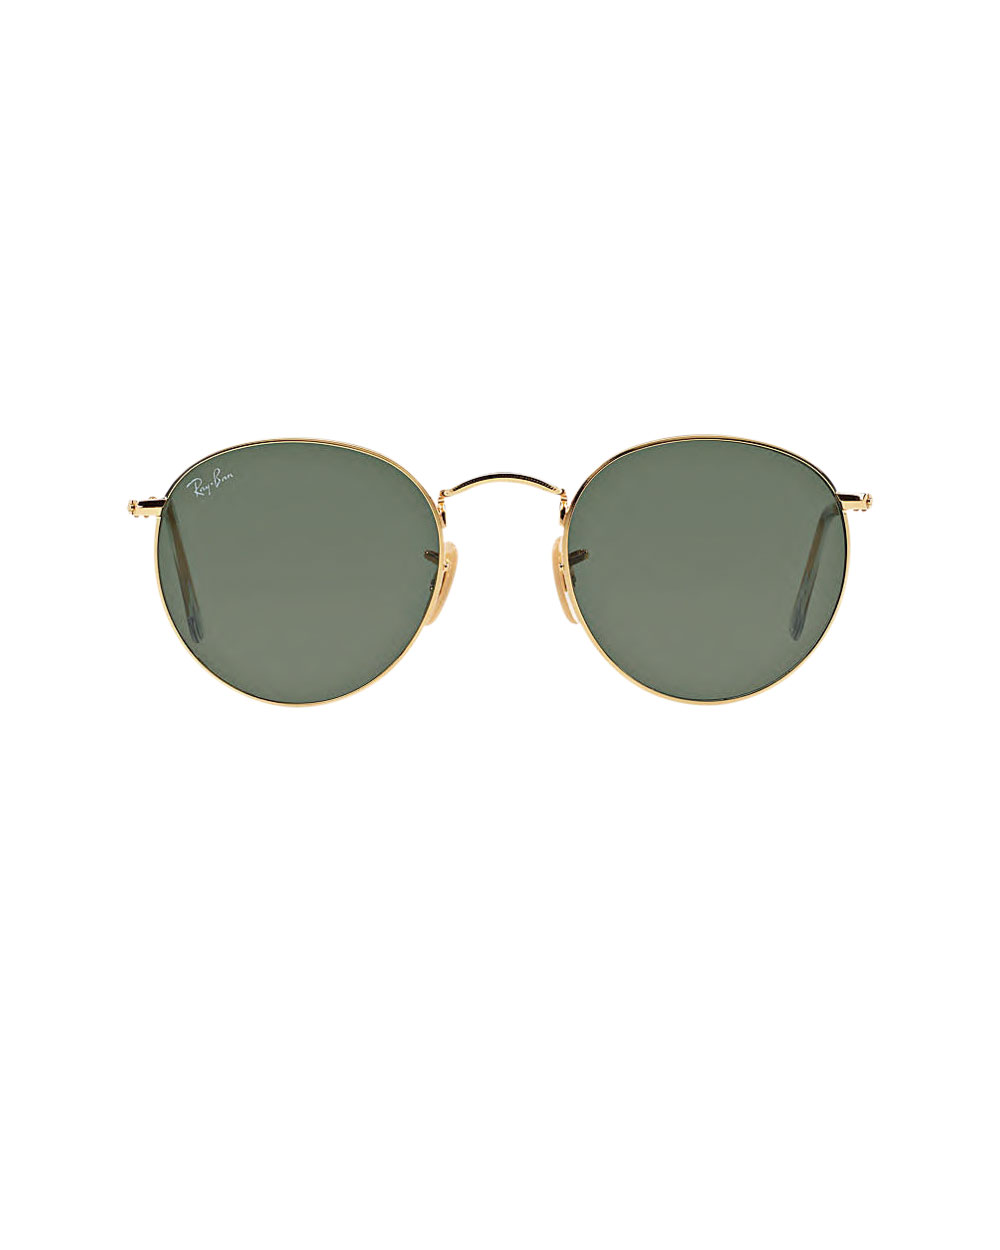 Ray-Ban sunglasses, $240, from Sunglass Hut